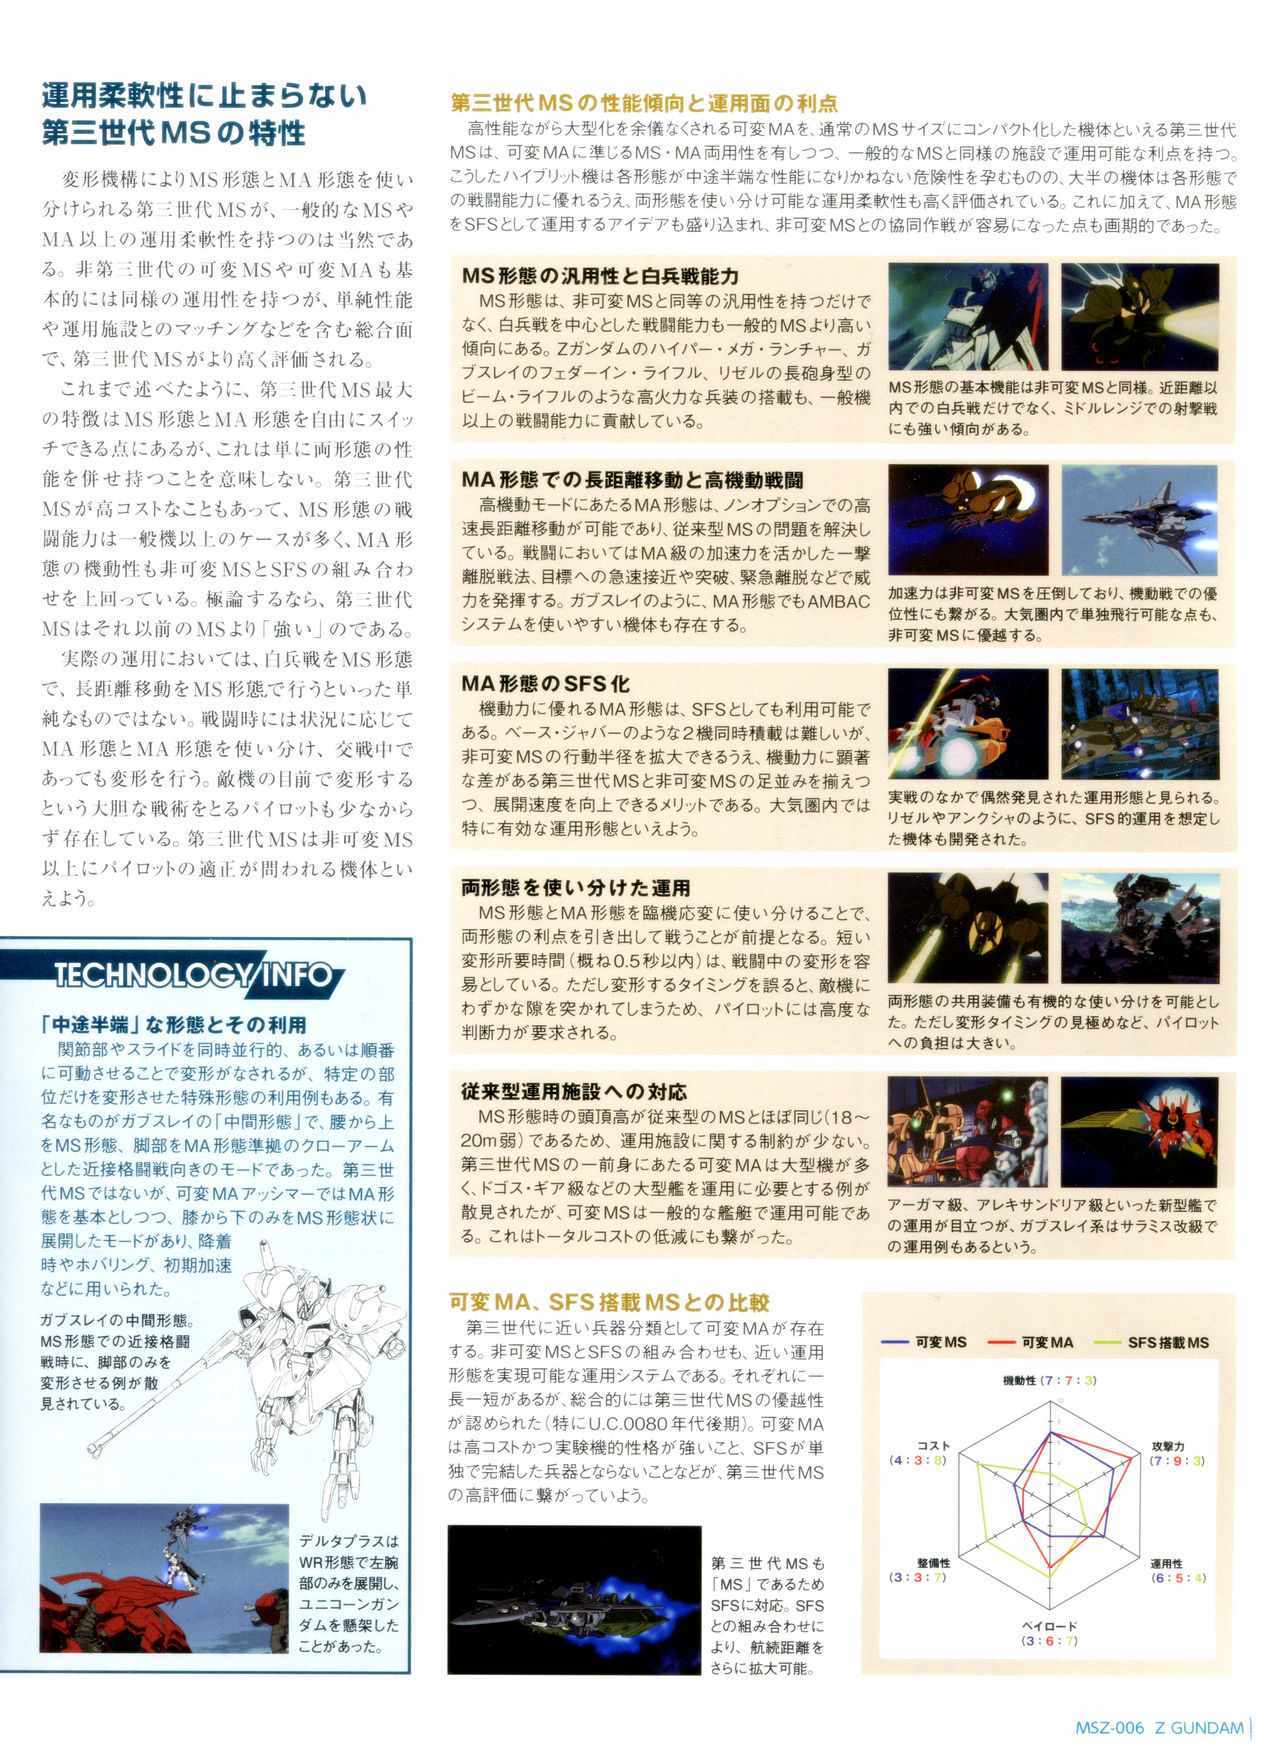 《Gundam Mobile Suit Bible》漫画 Suit Bible 04卷